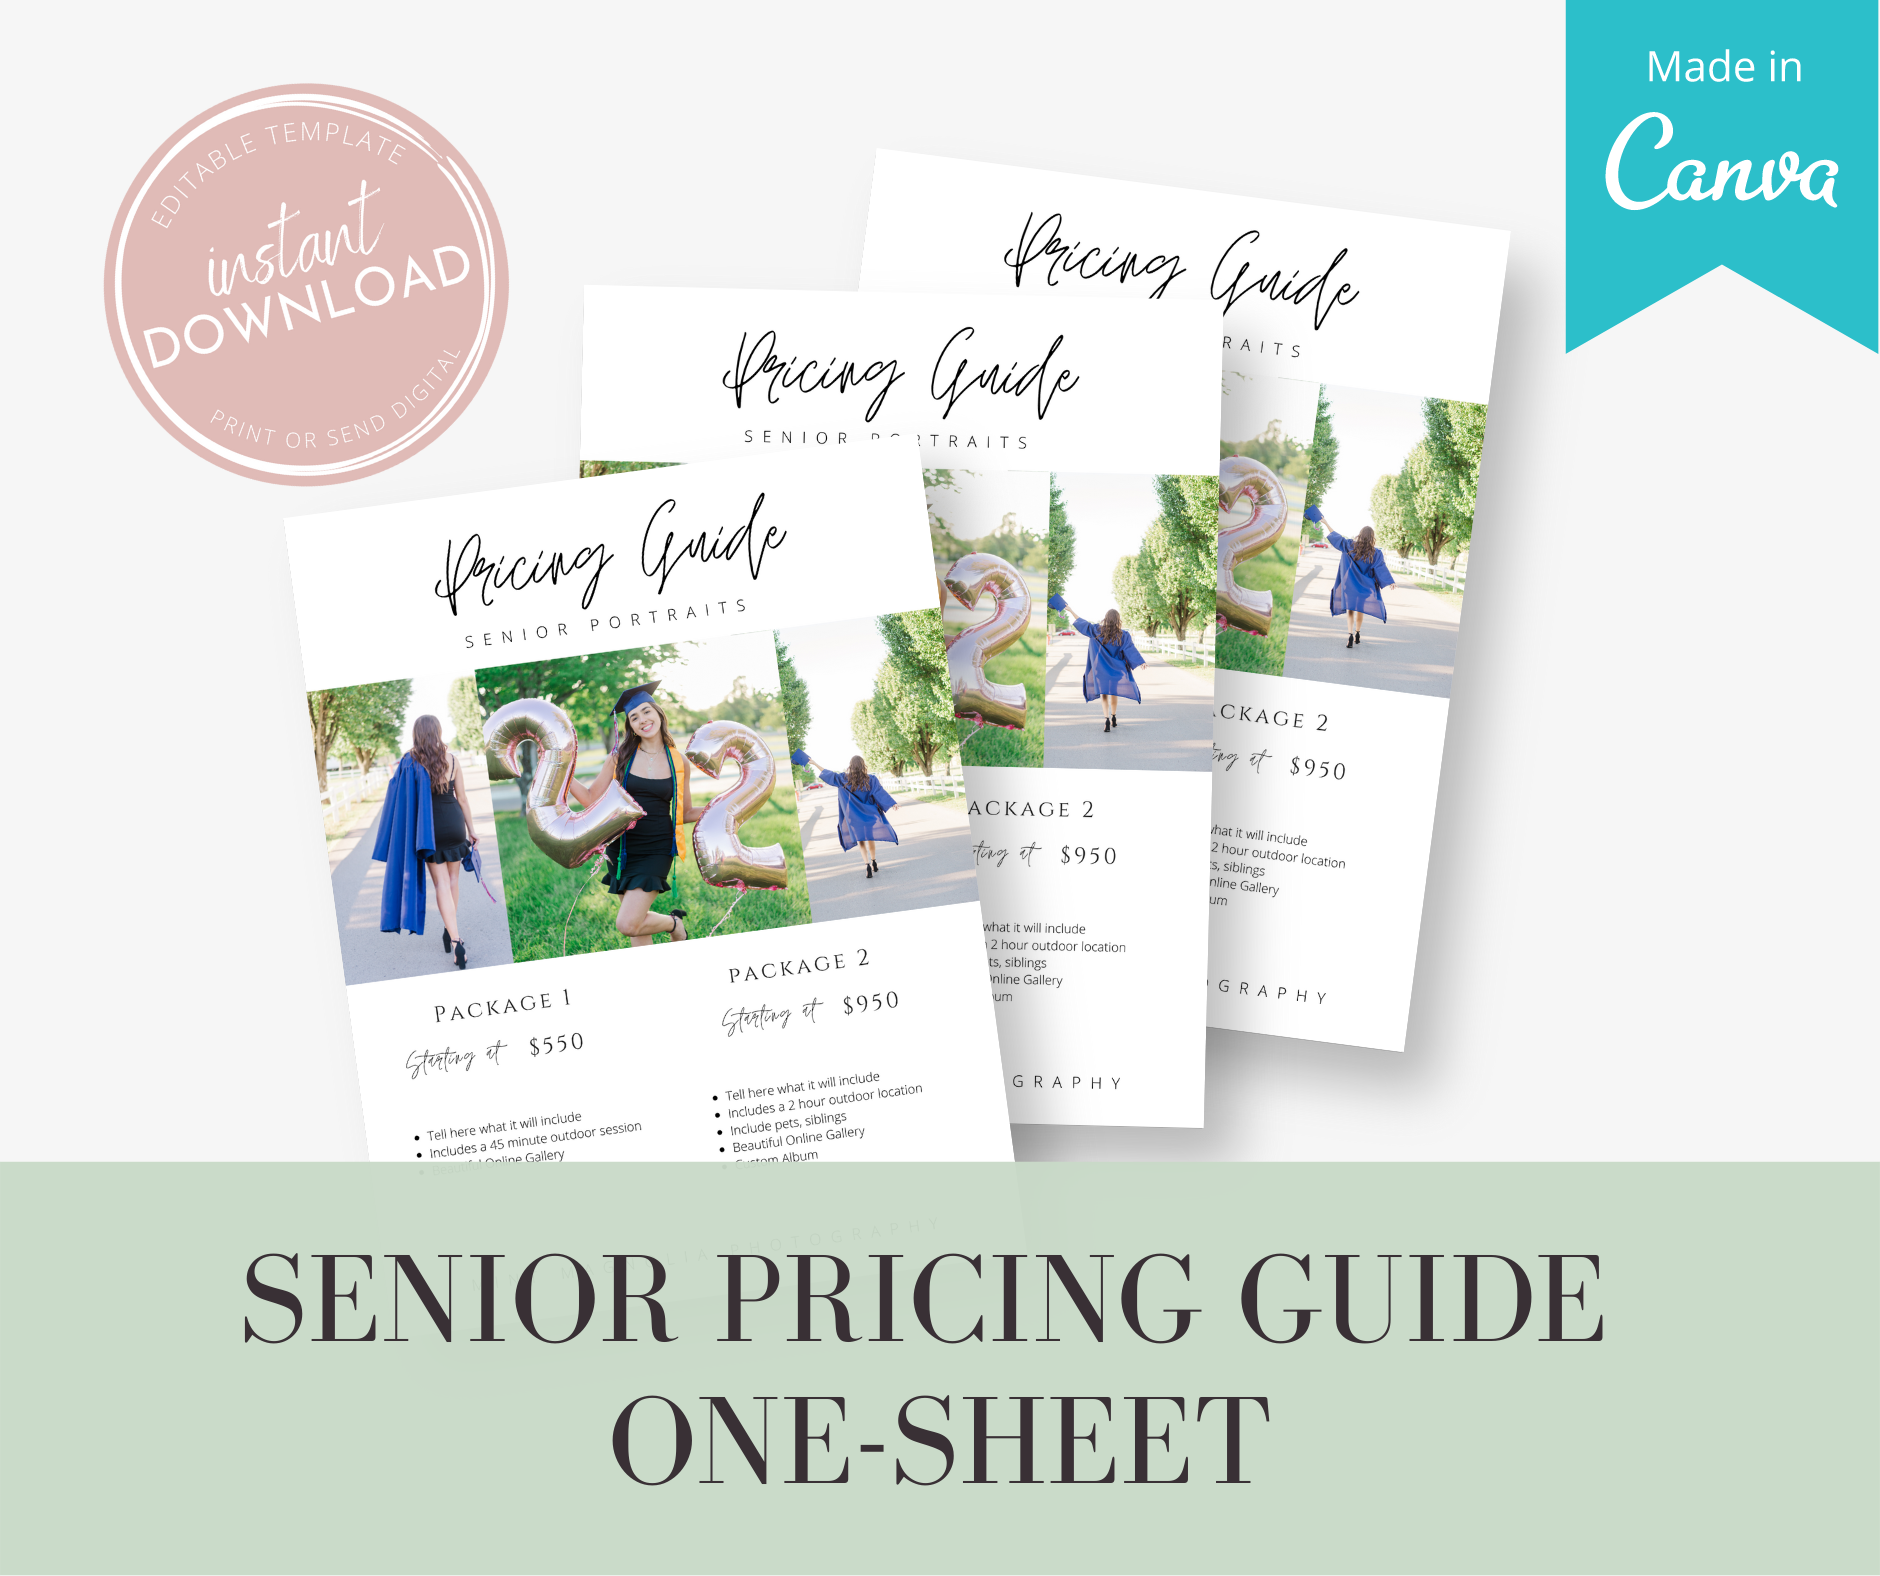 Senior Pricing Guide One-Sheet